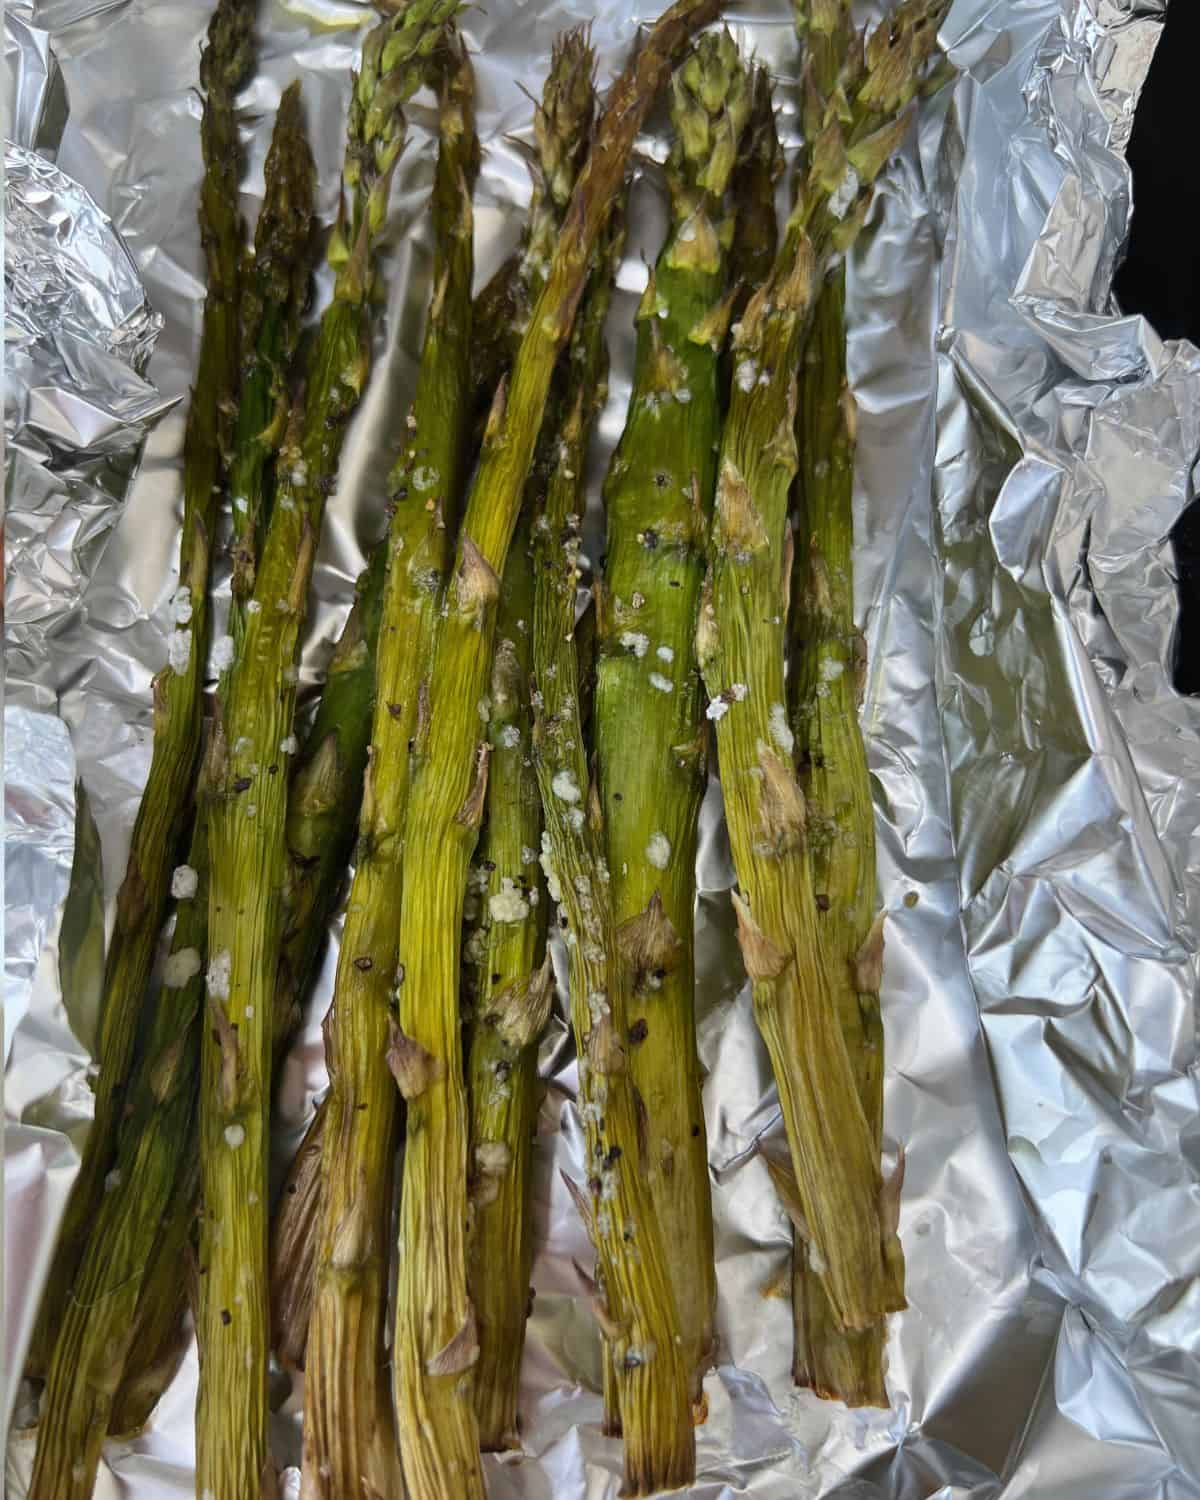 Seasoned smoked asparagus in foil. 